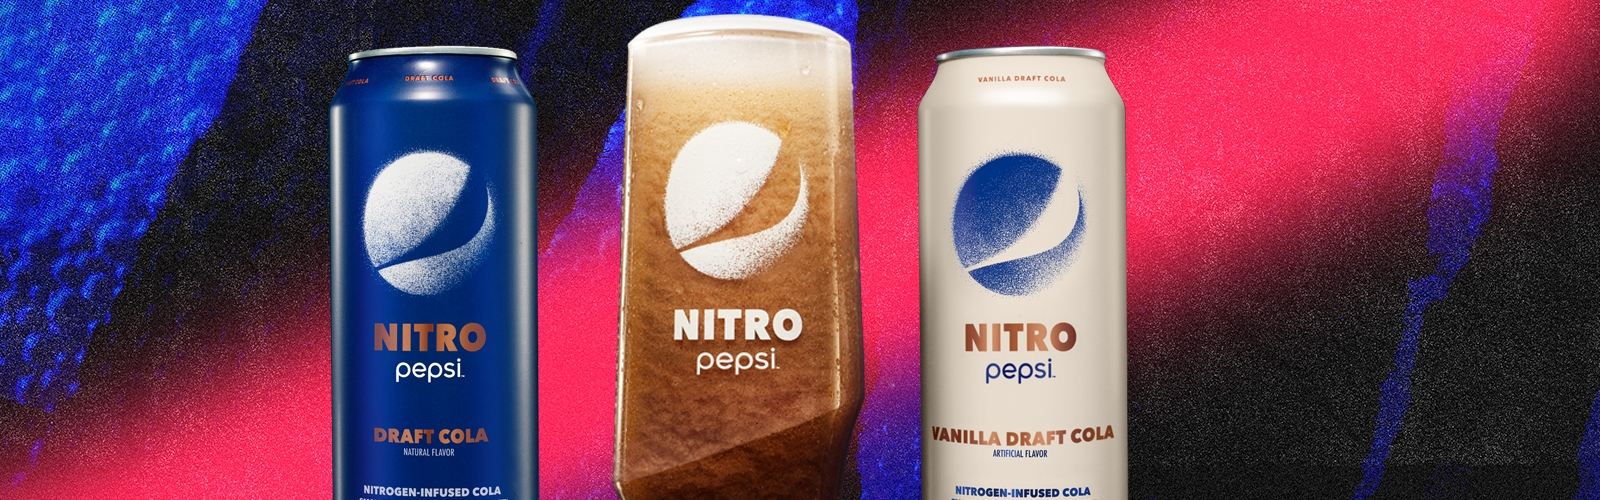 Nitro Pepsi and Vanilla Nitro Pepsi